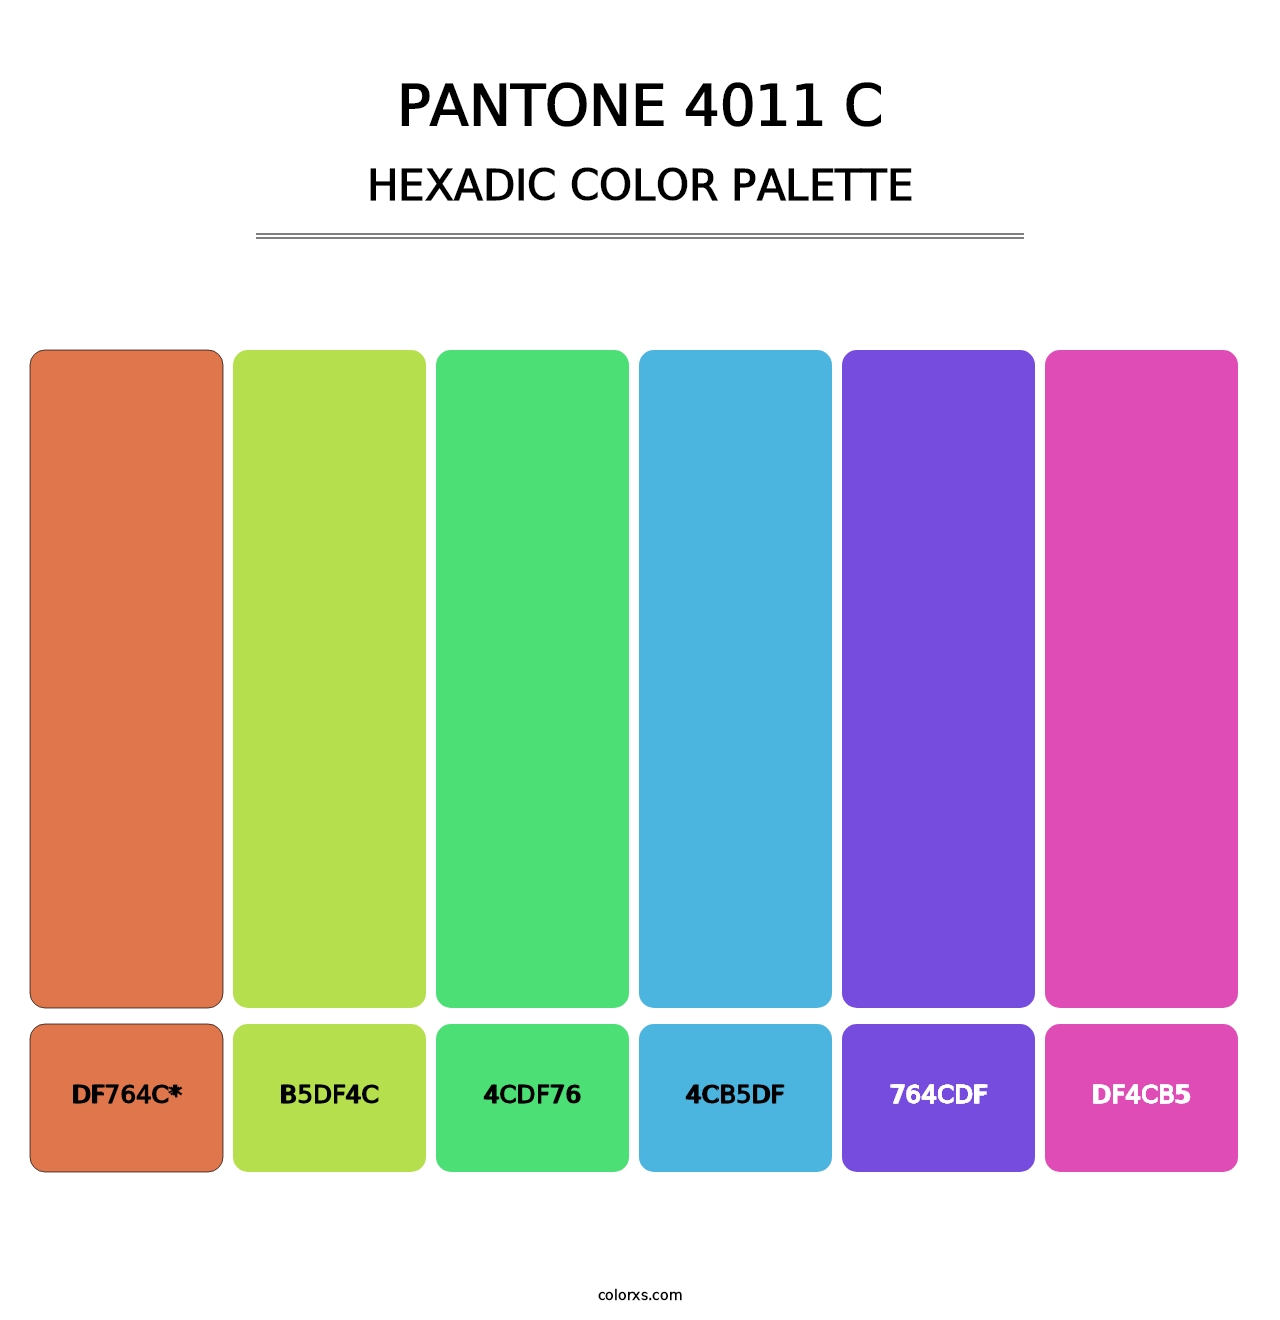 PANTONE 4011 C - Hexadic Color Palette